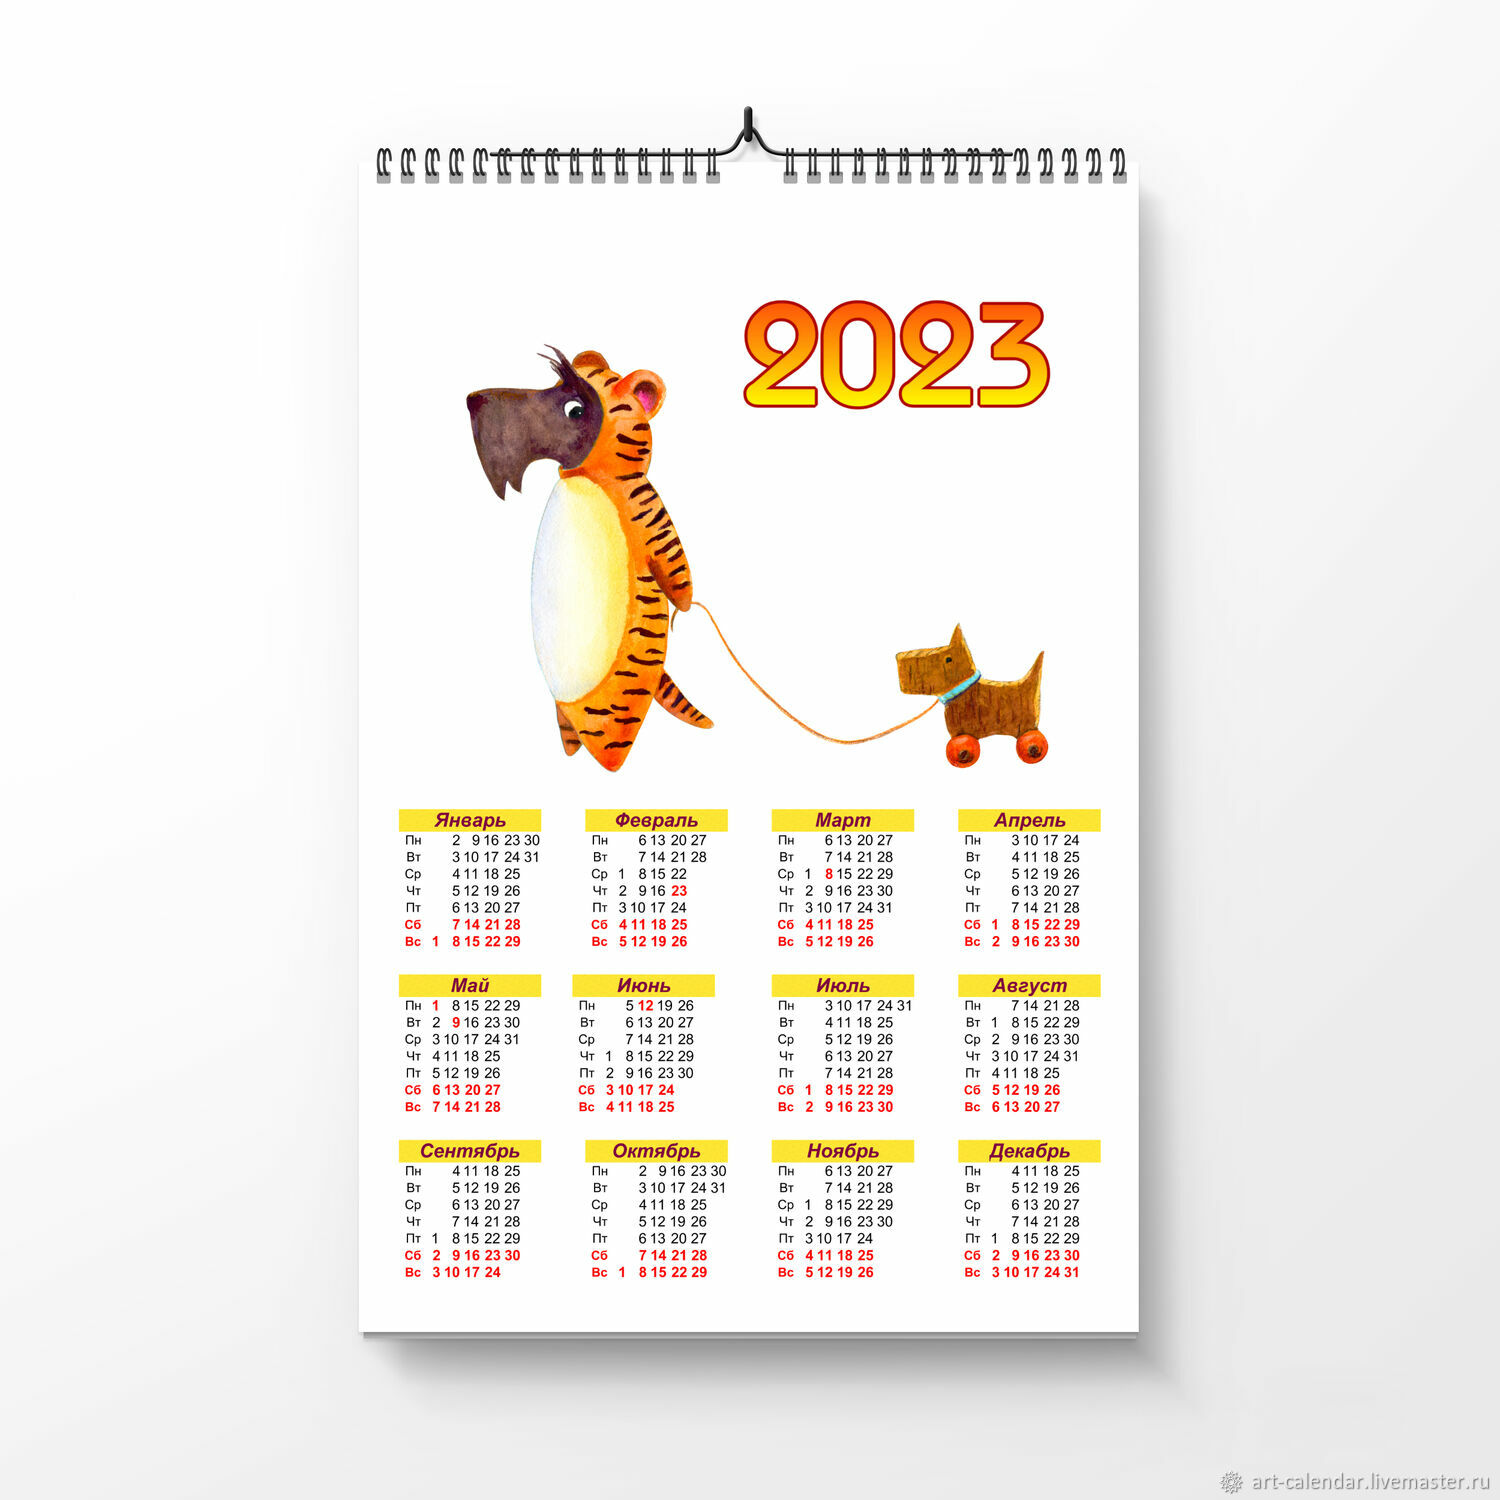  Календарь А3 Скотч-терьеры в акварелях 2023 год тигра, Календари, Москва,  Фото №1